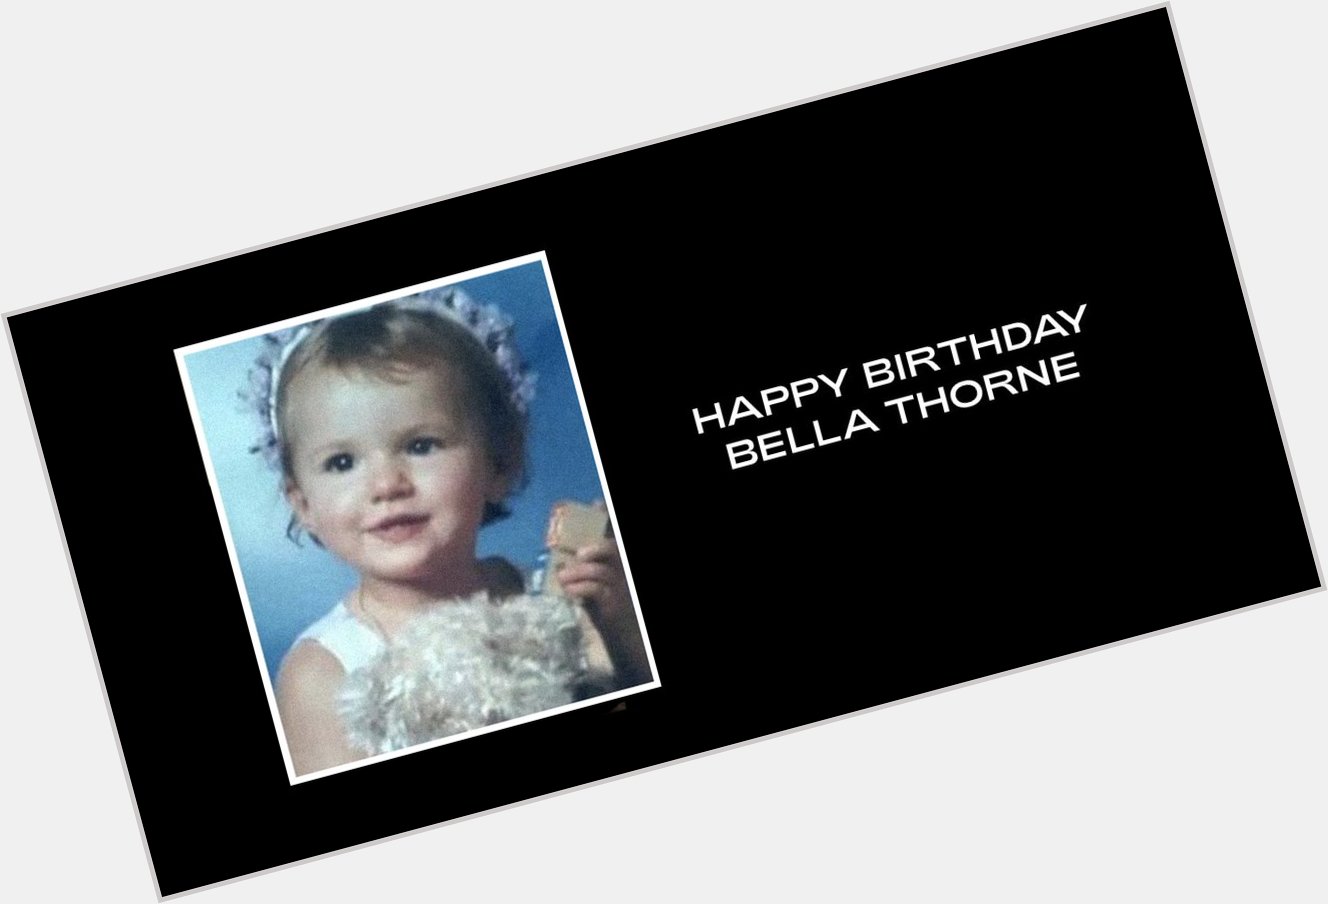  Happy Birthday Bella Thorne & Tyler Williams  